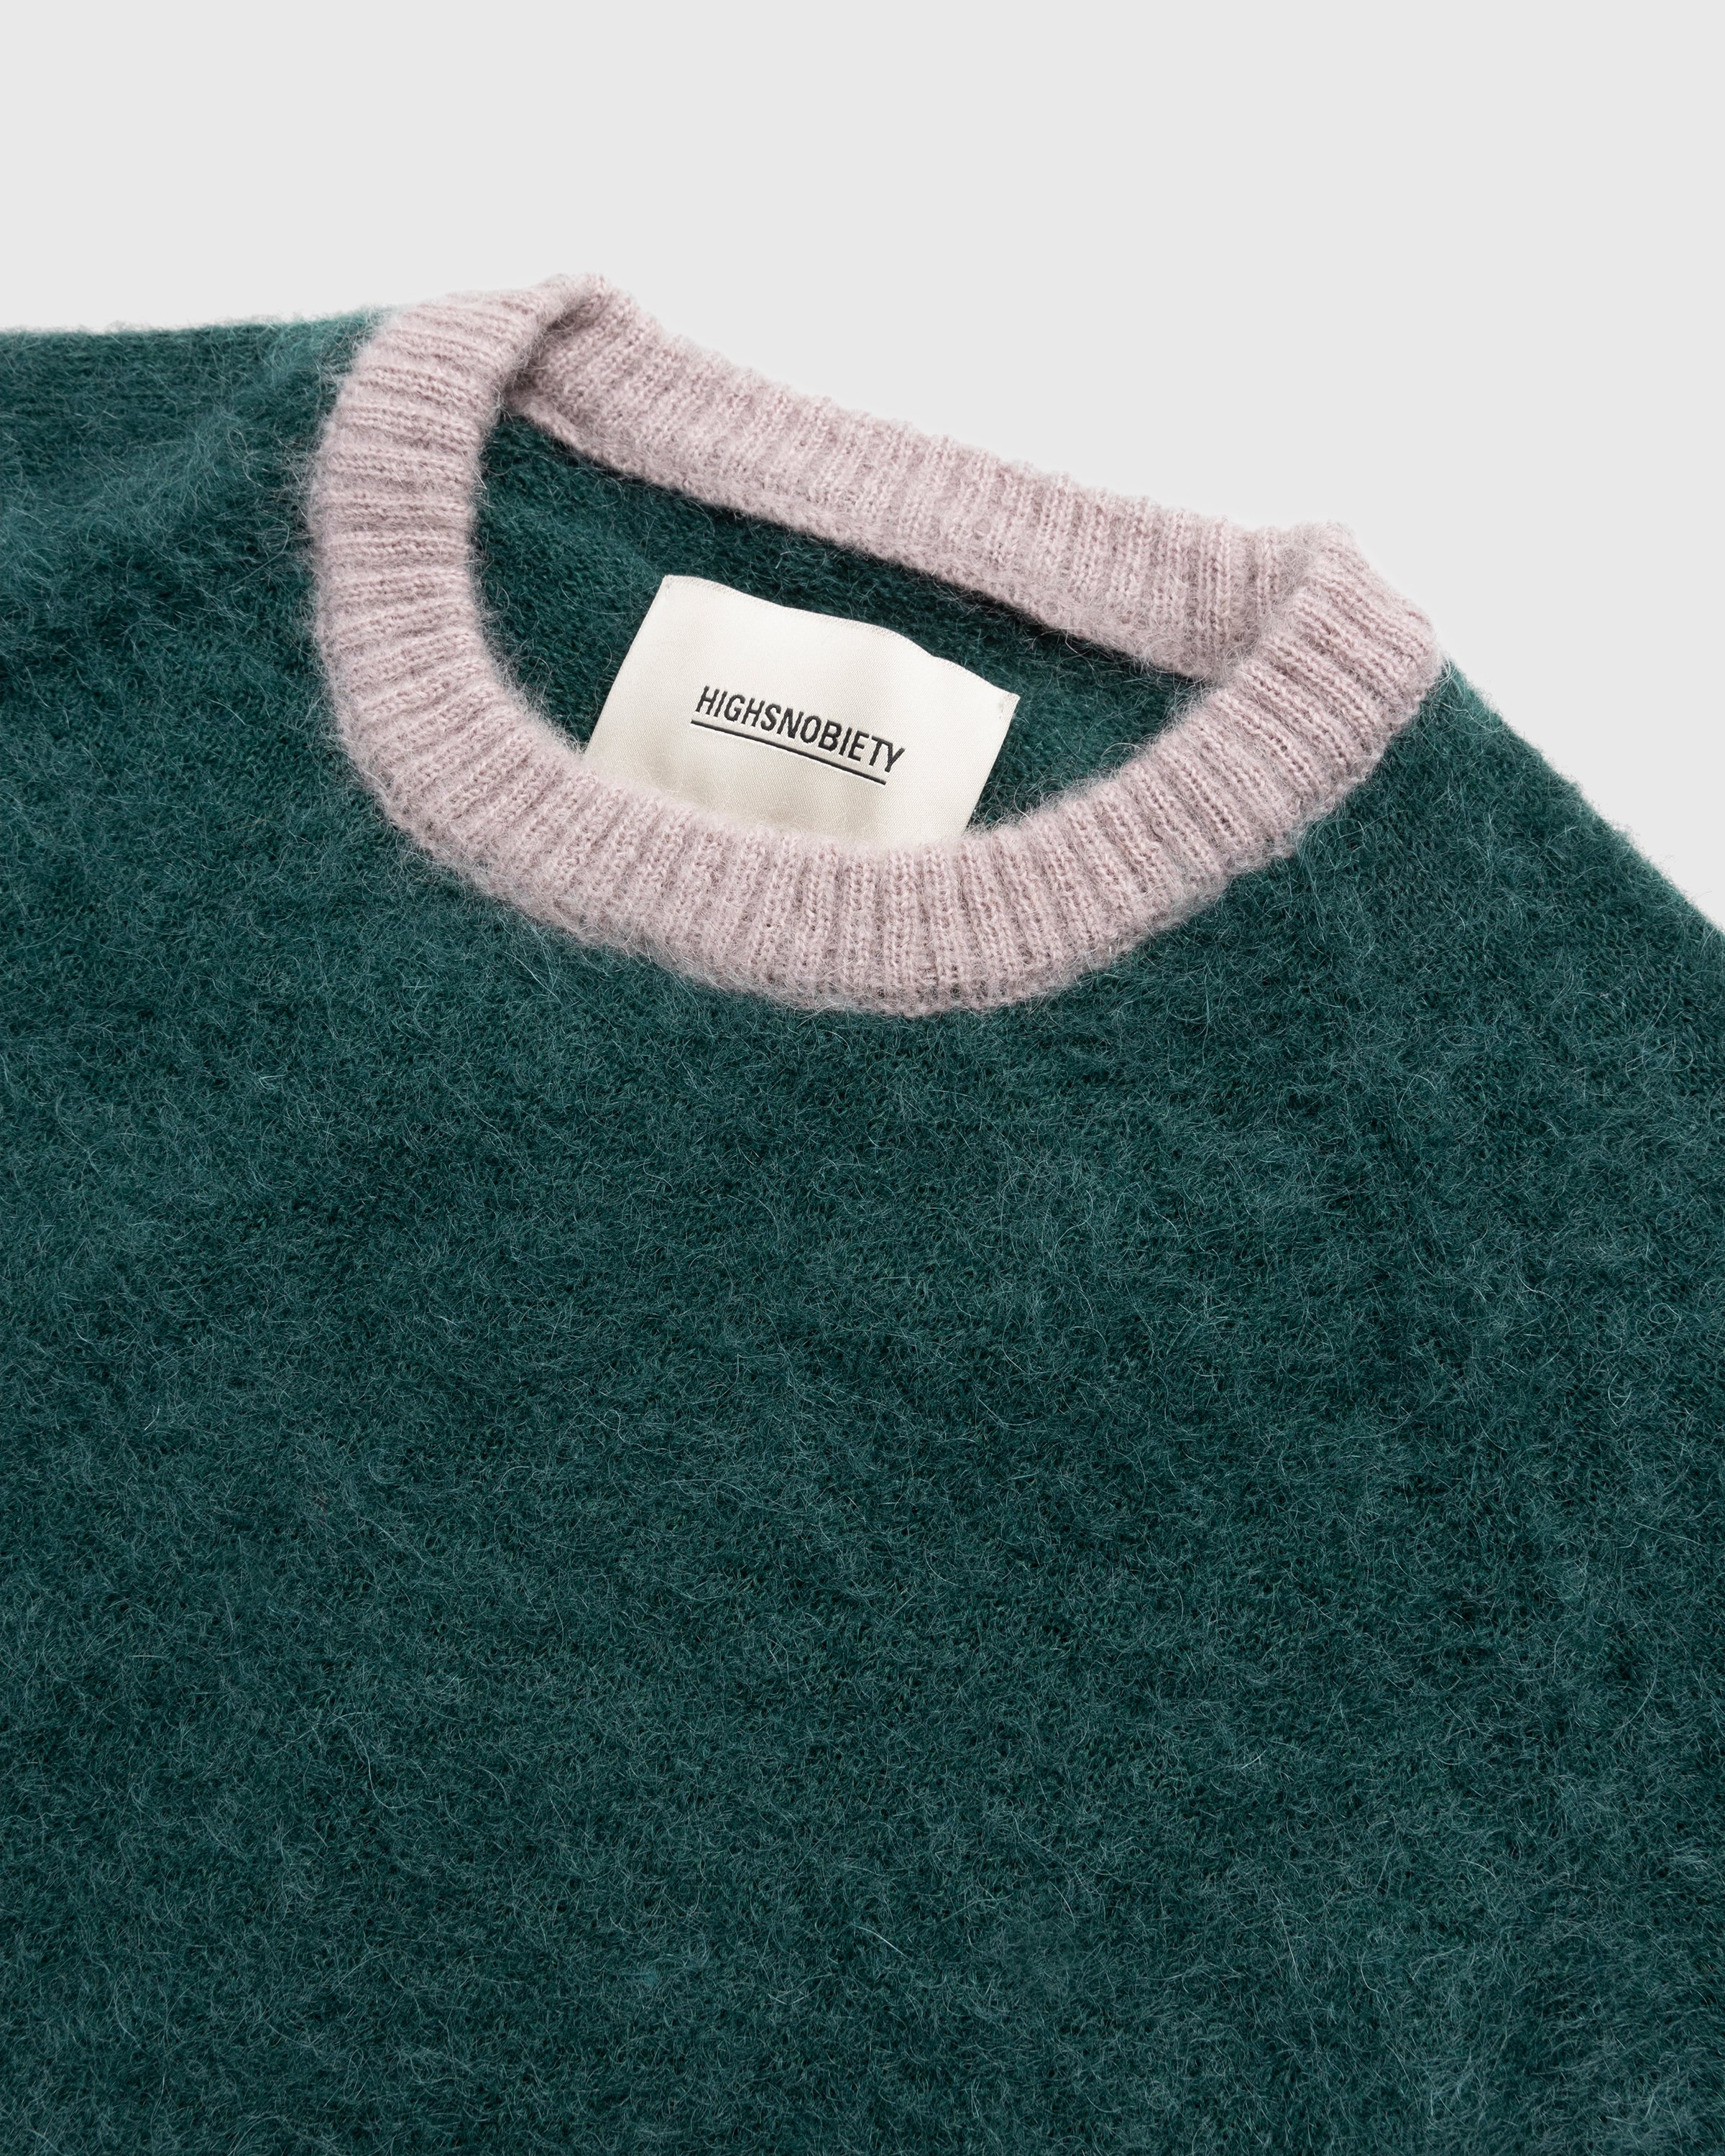 Highsnobiety - Alpaca Sweater Green - Clothing - Green - Image 3